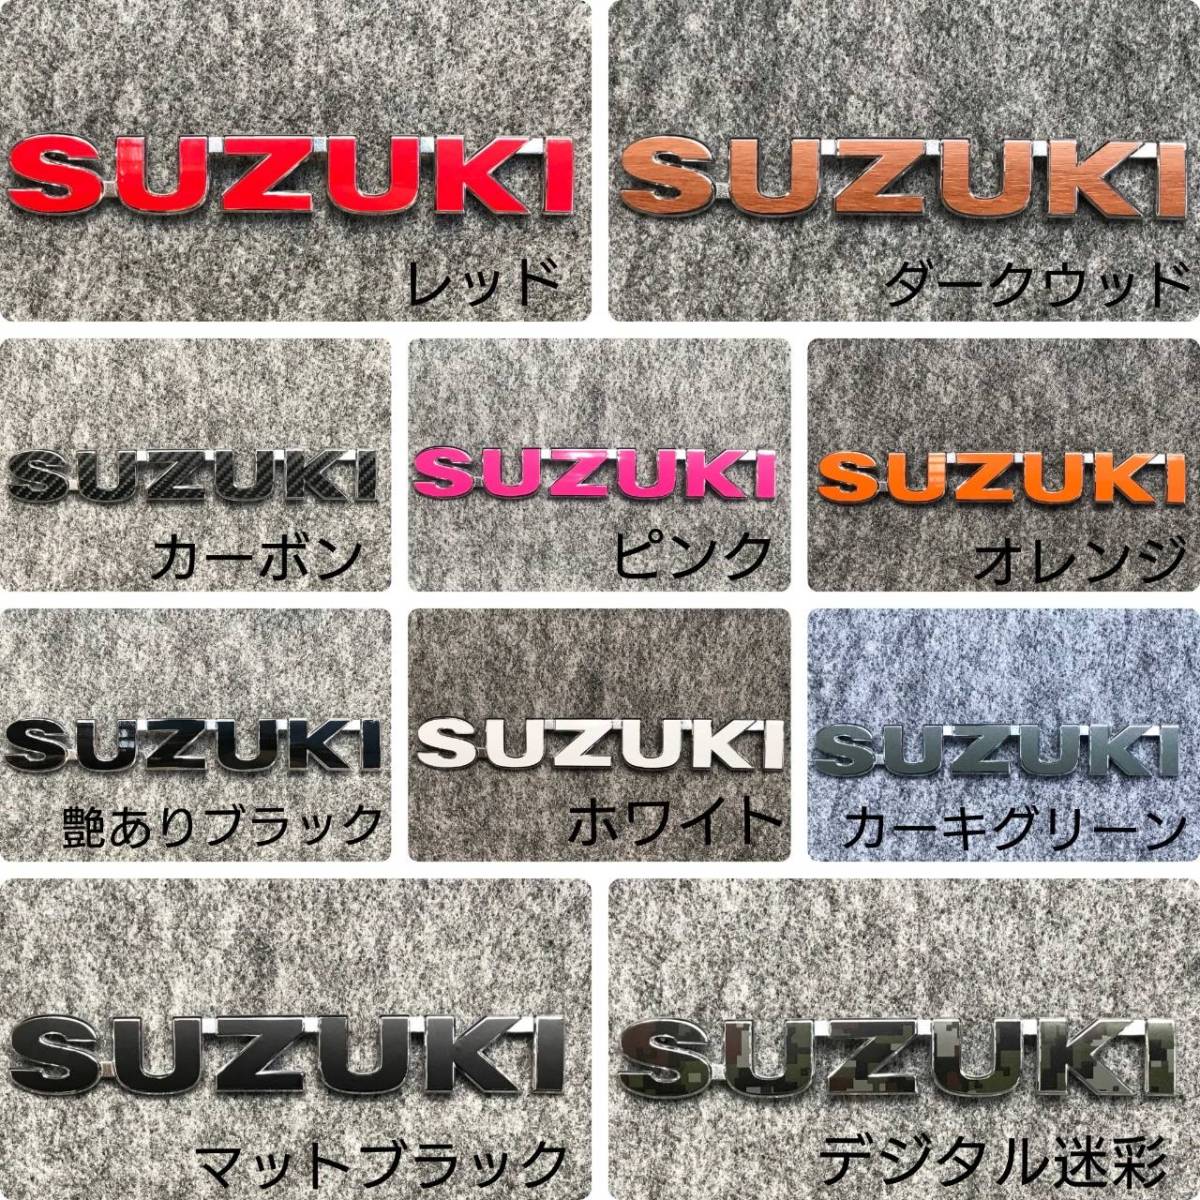 SUZUKI Suzuki Jimny Jimny rear emblem sticker 2 pieces set color .11 color from is possible to choose!!!